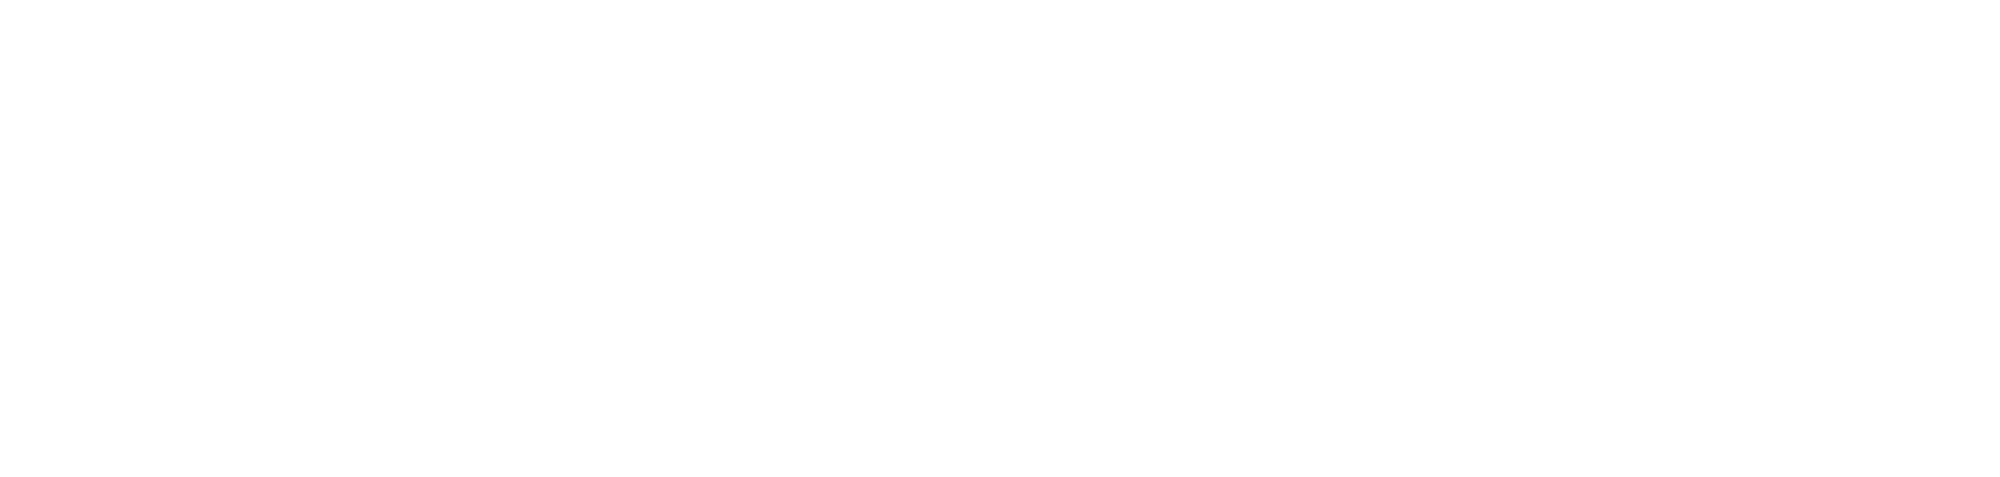 lantum company logo white